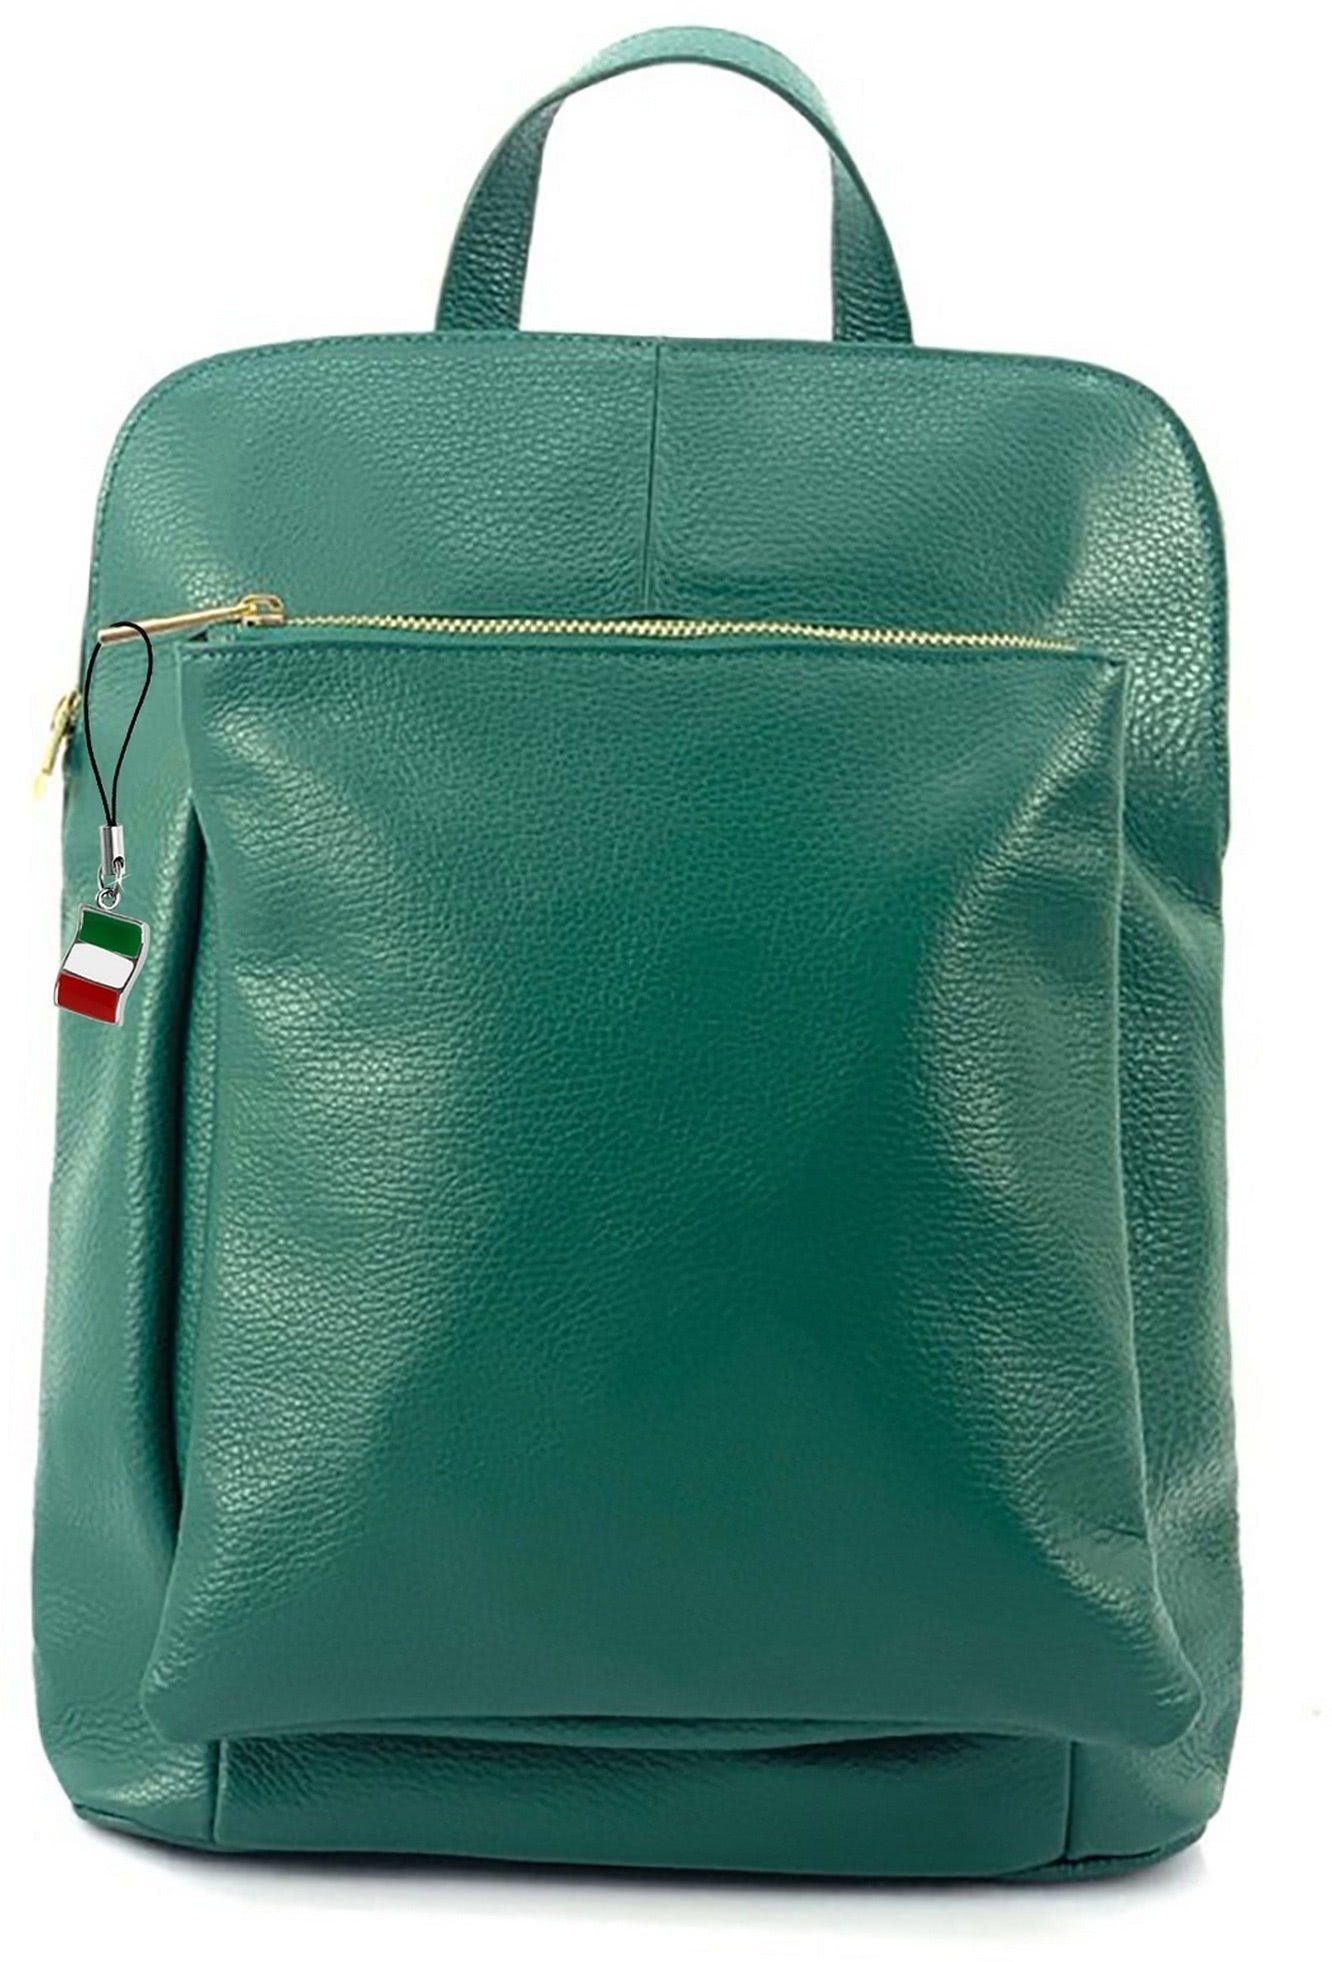 (Cityrucksack, Cityrucksack Damen Echtleder Cityrucksack), Italy grün, Made-In Echtleder FLORENCE Rucksack Damen Tasche Florence